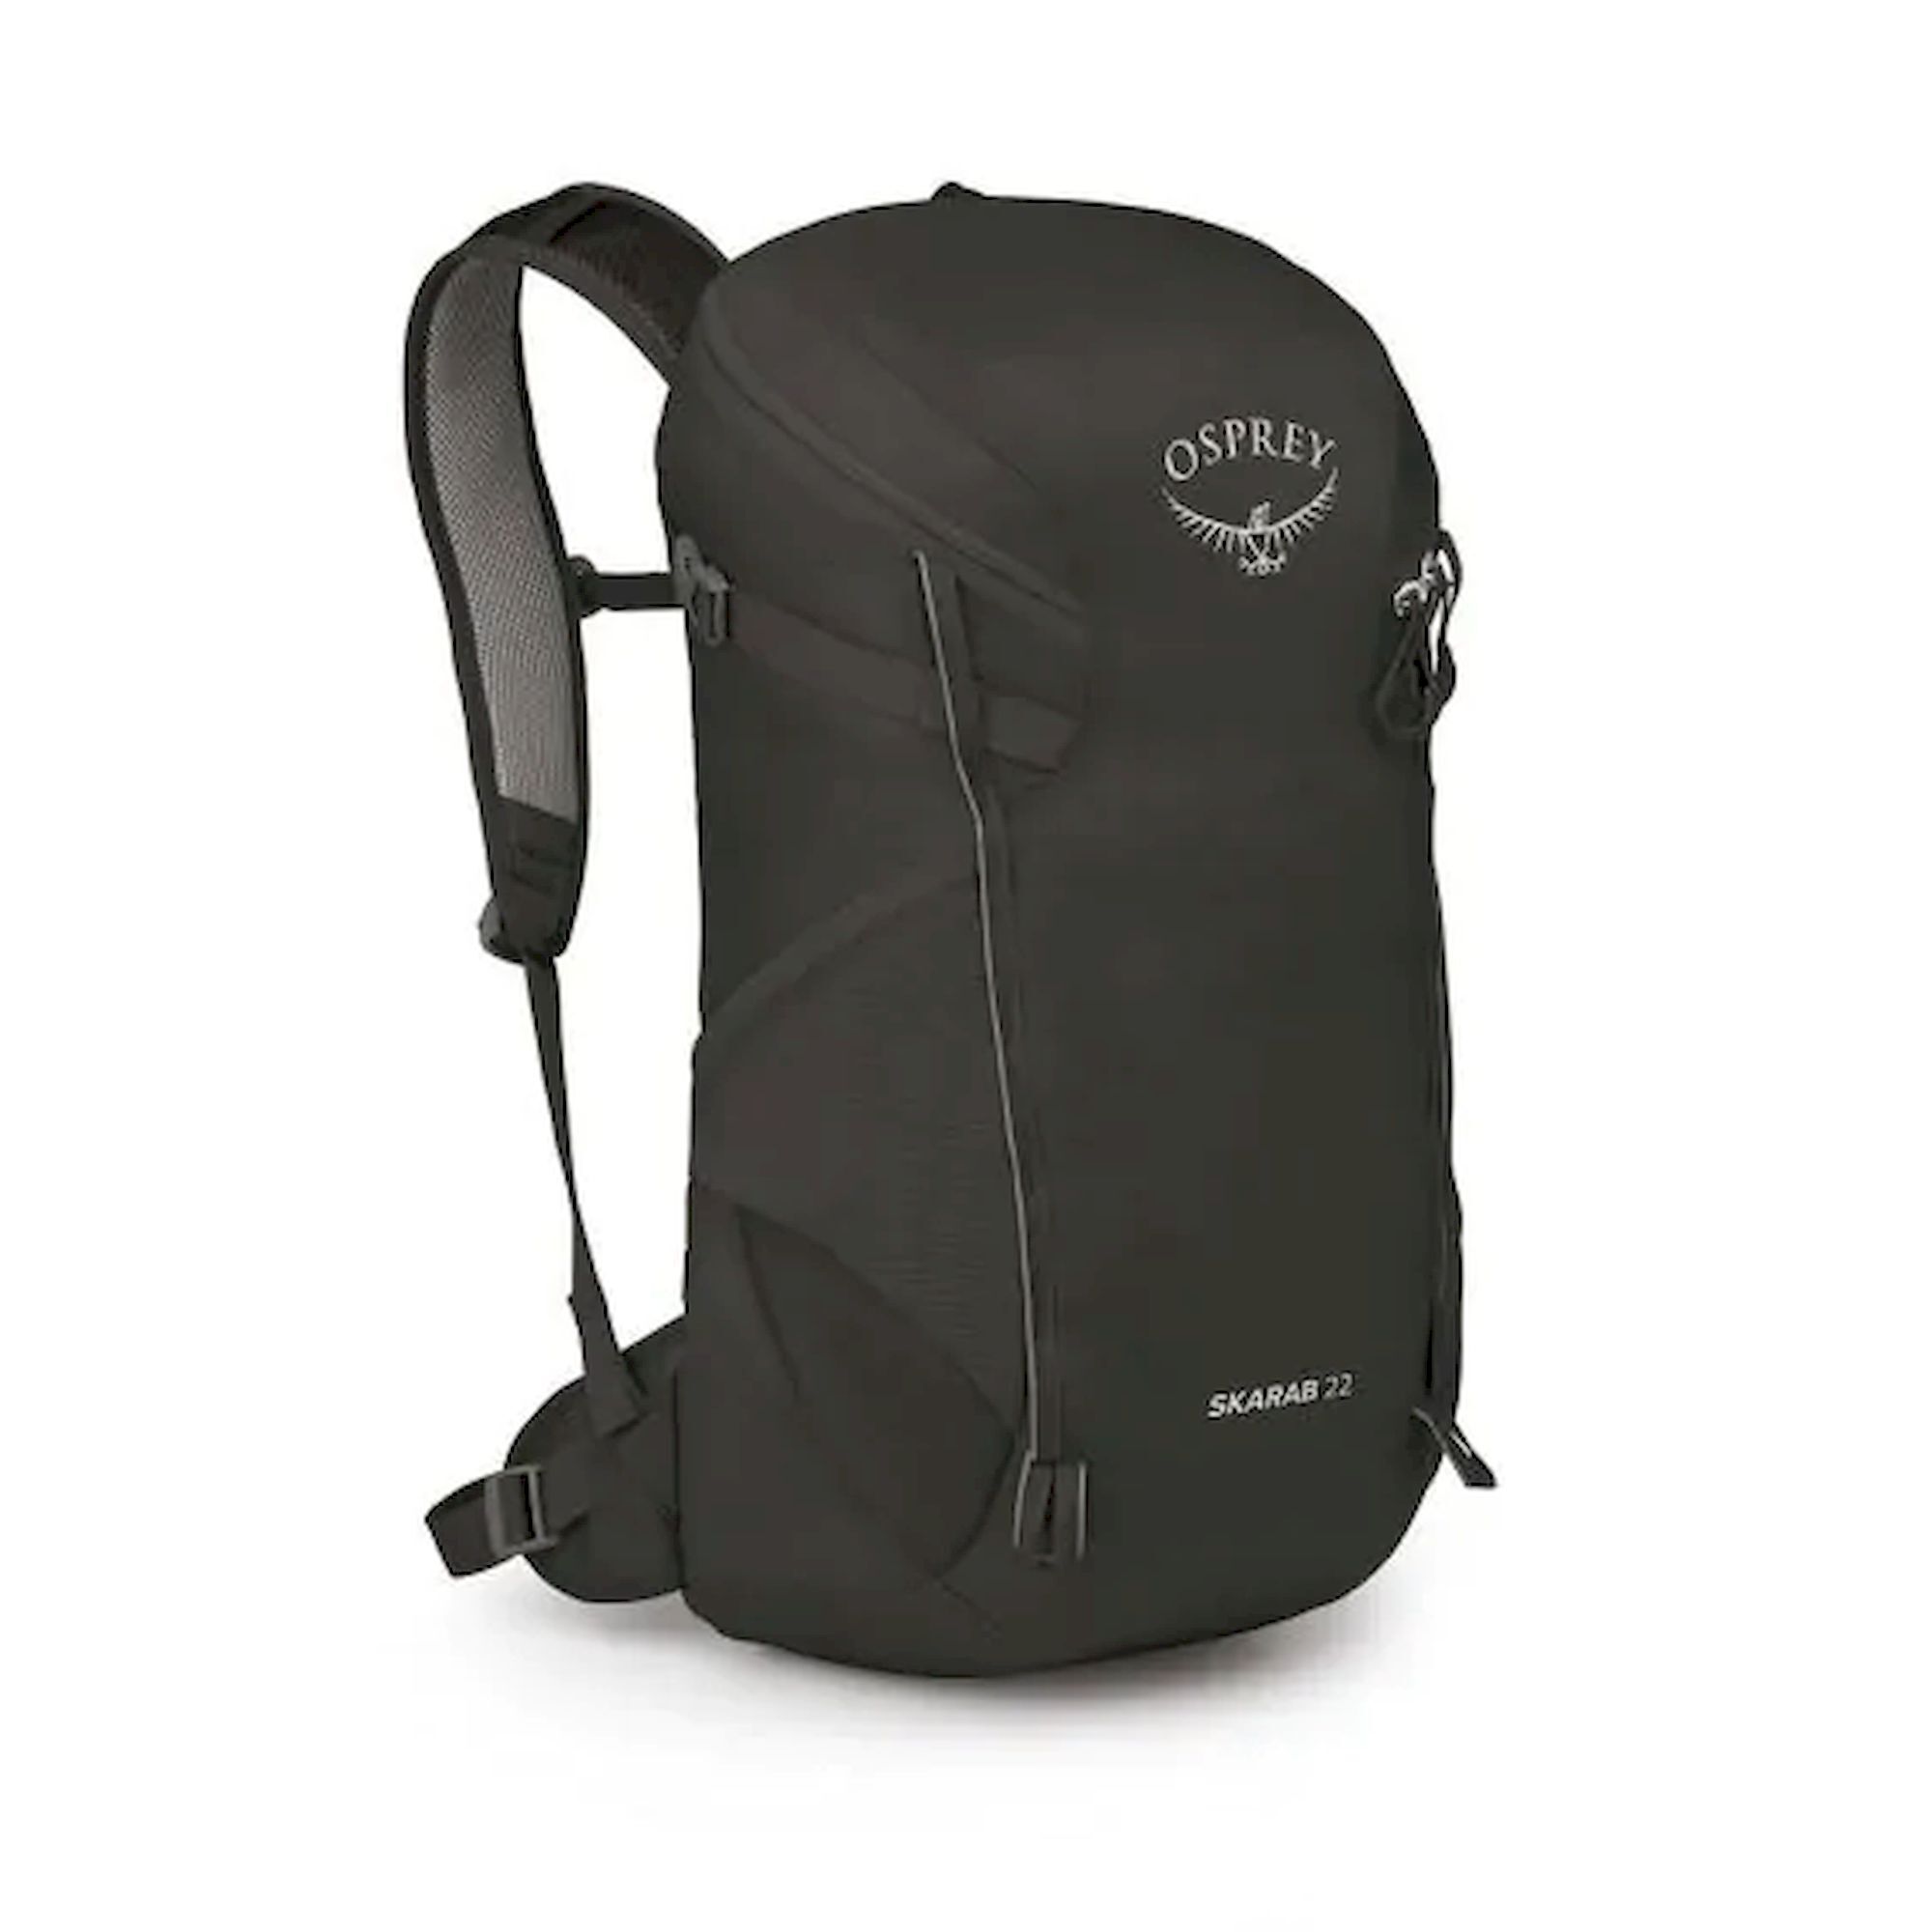 Osprey Skarab 22 - Hiking backpack - Men's